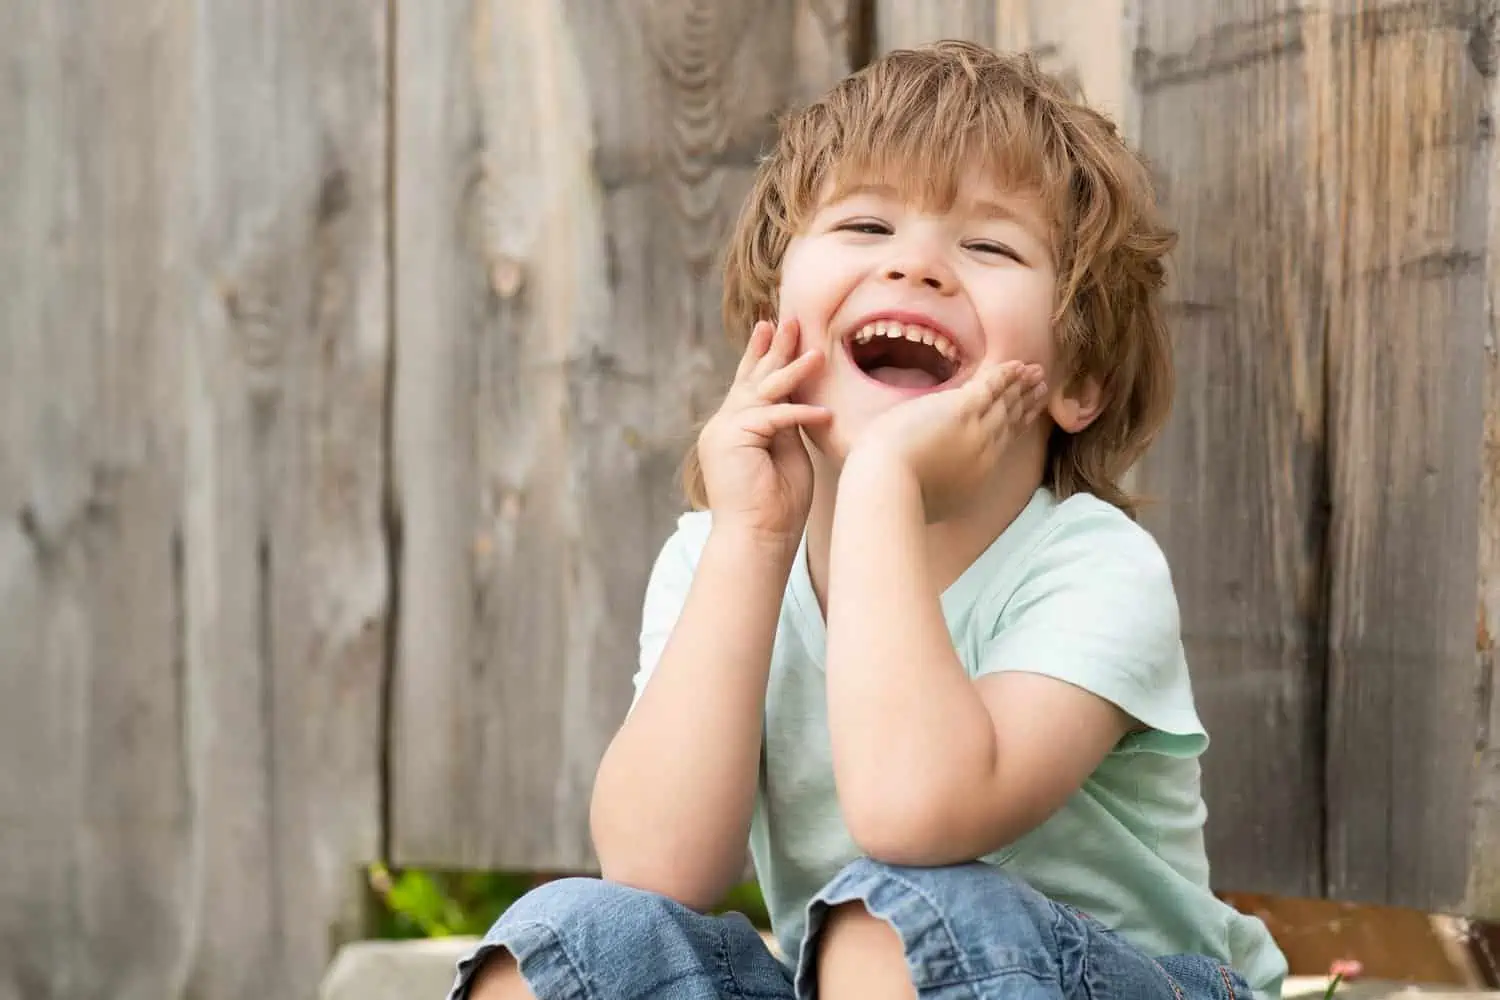 Cheerful little boy sitting in the garden near a wooden fence